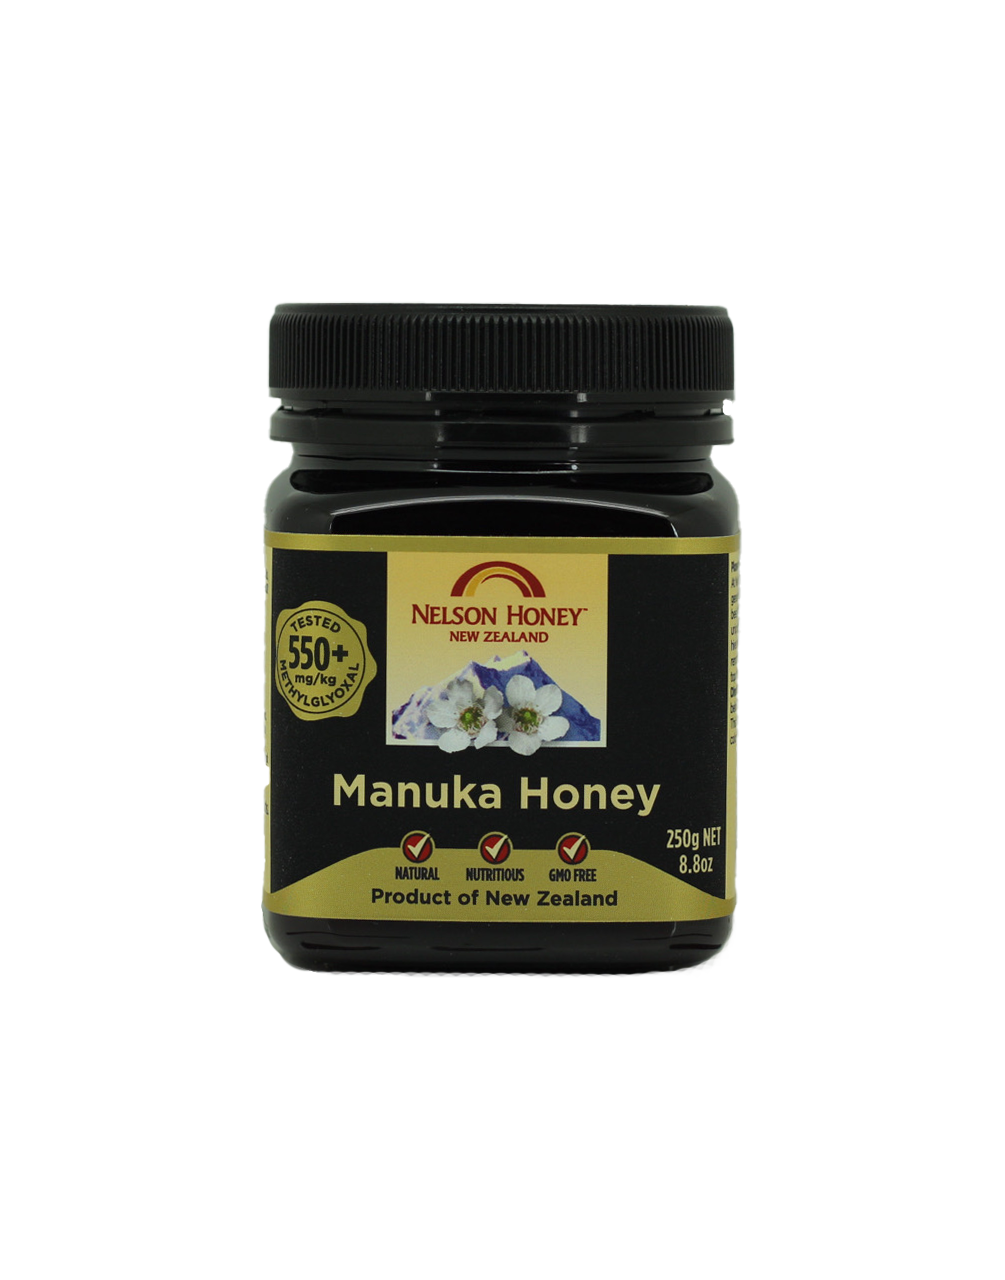 Nelson Manuka Honey - MG 550+